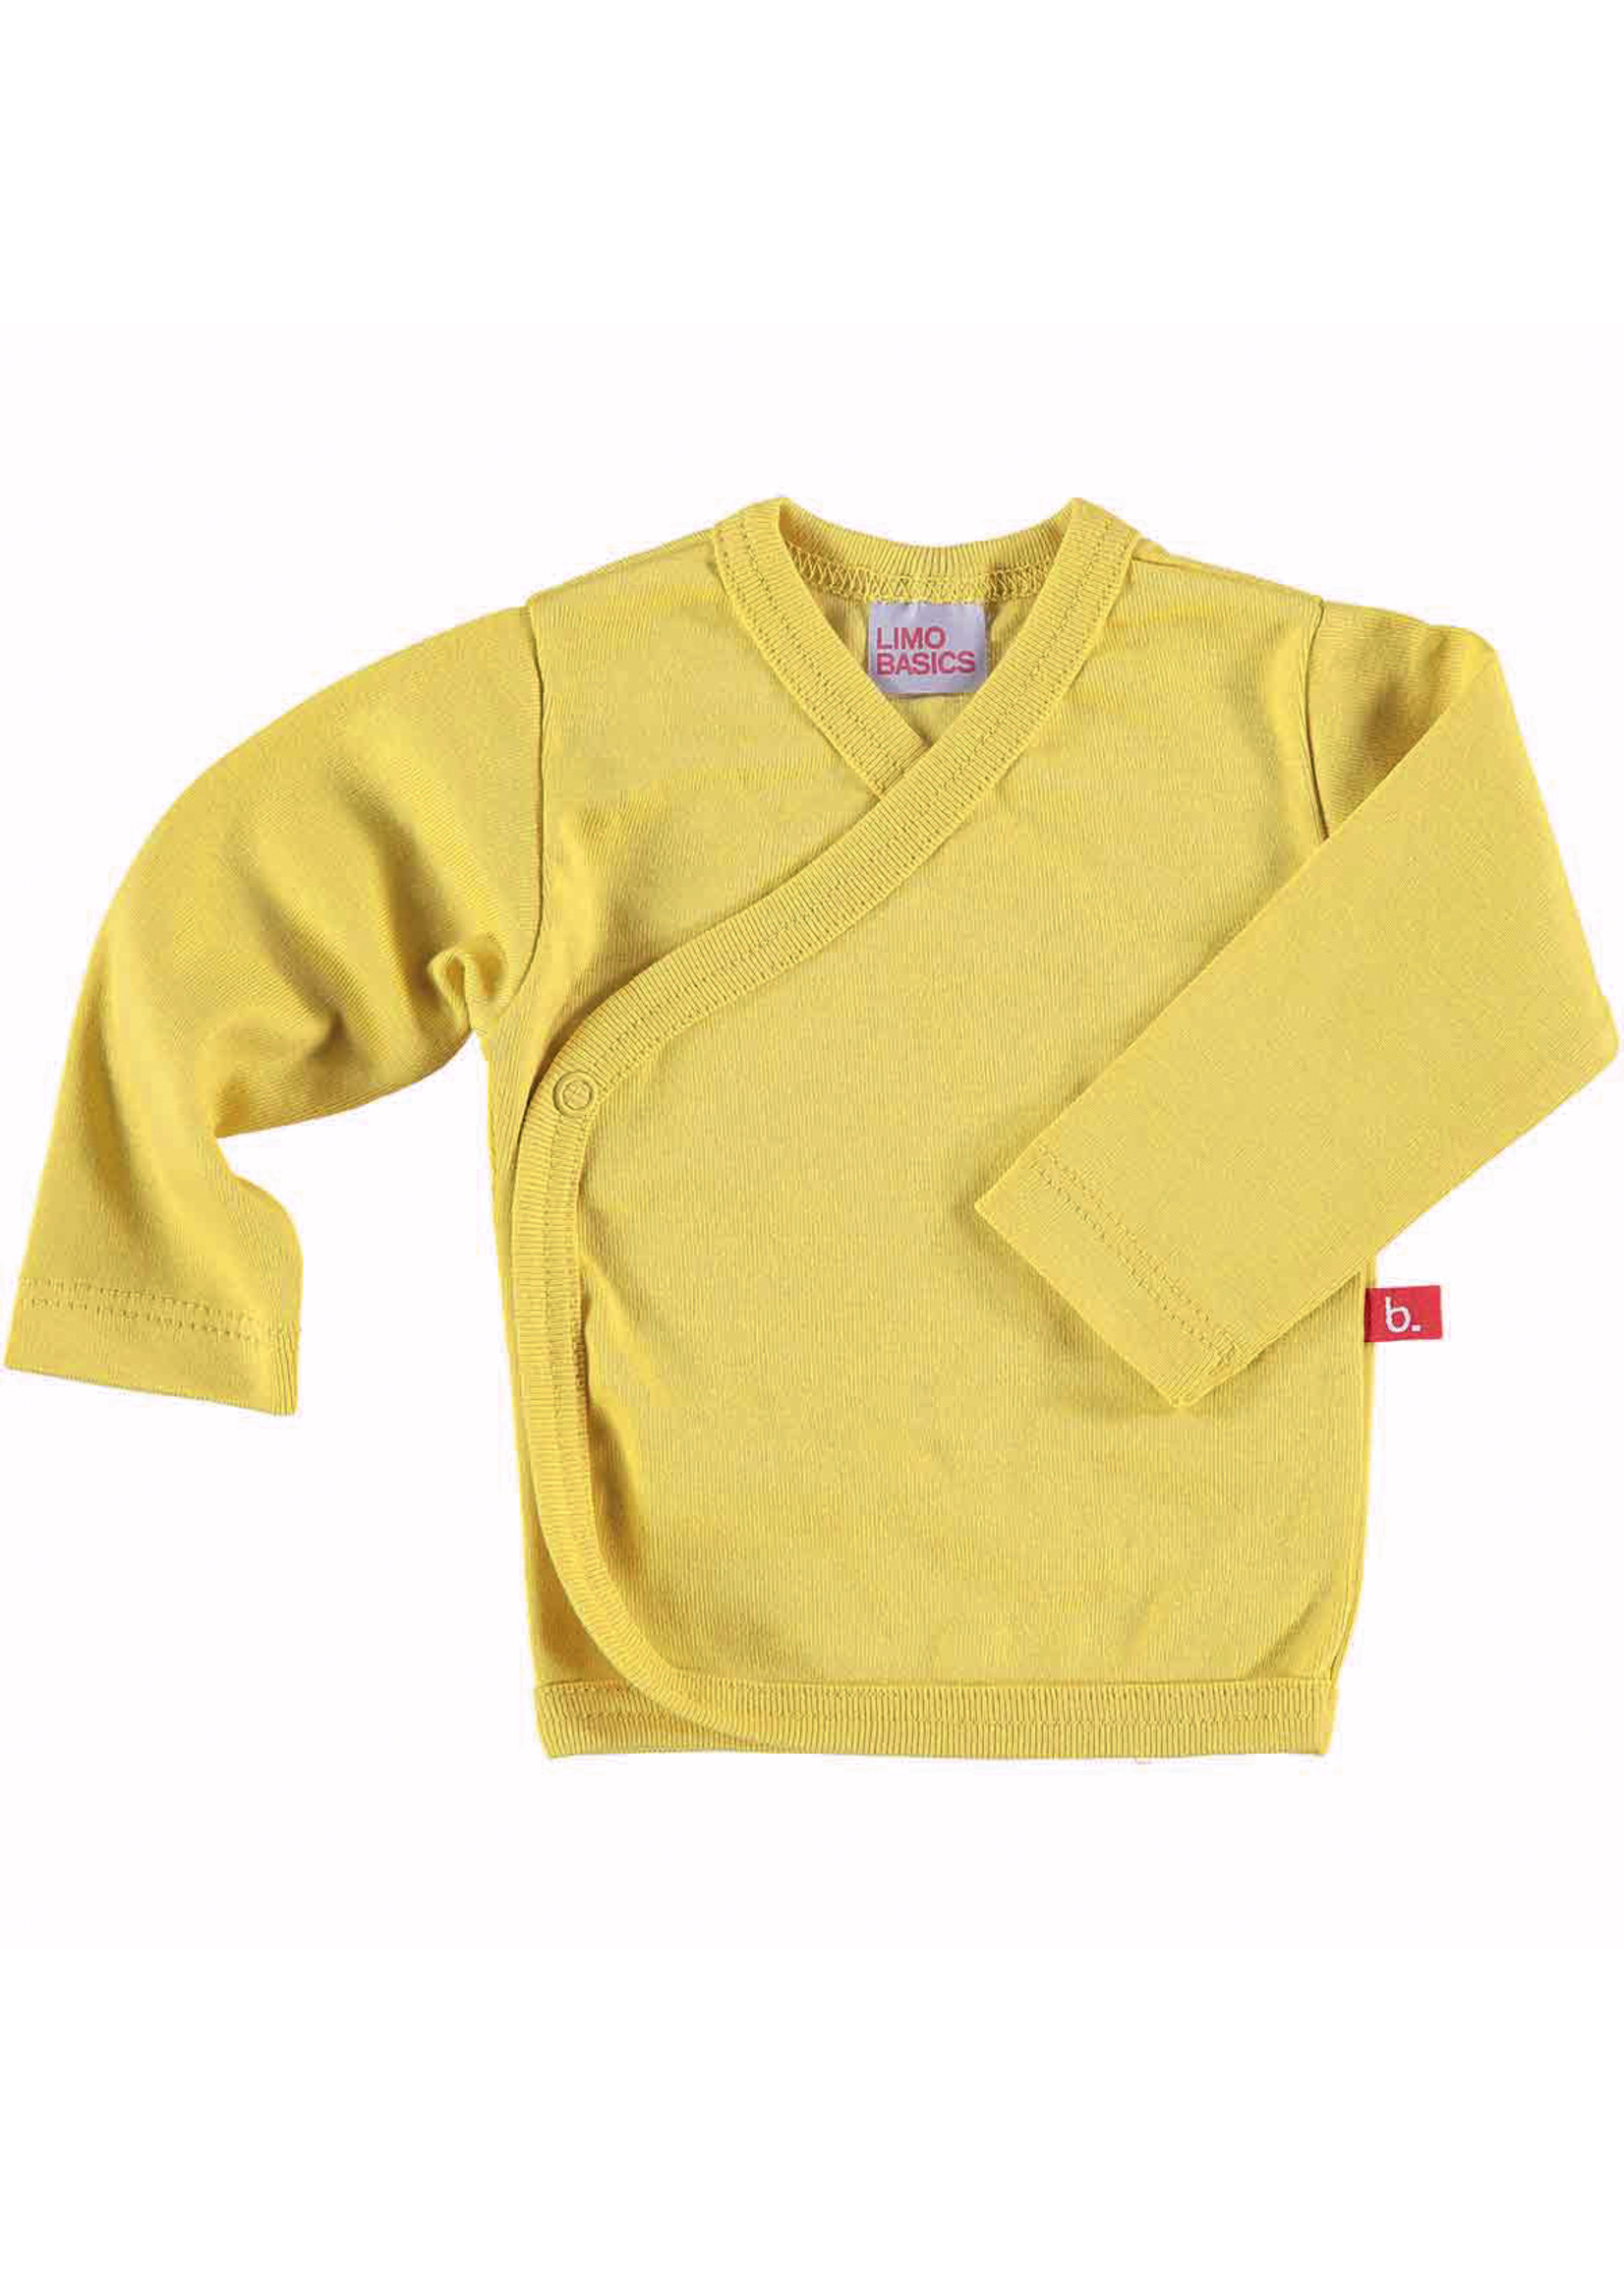 Limo basics Kimono organic cotton shirt longsleeve yellow 56